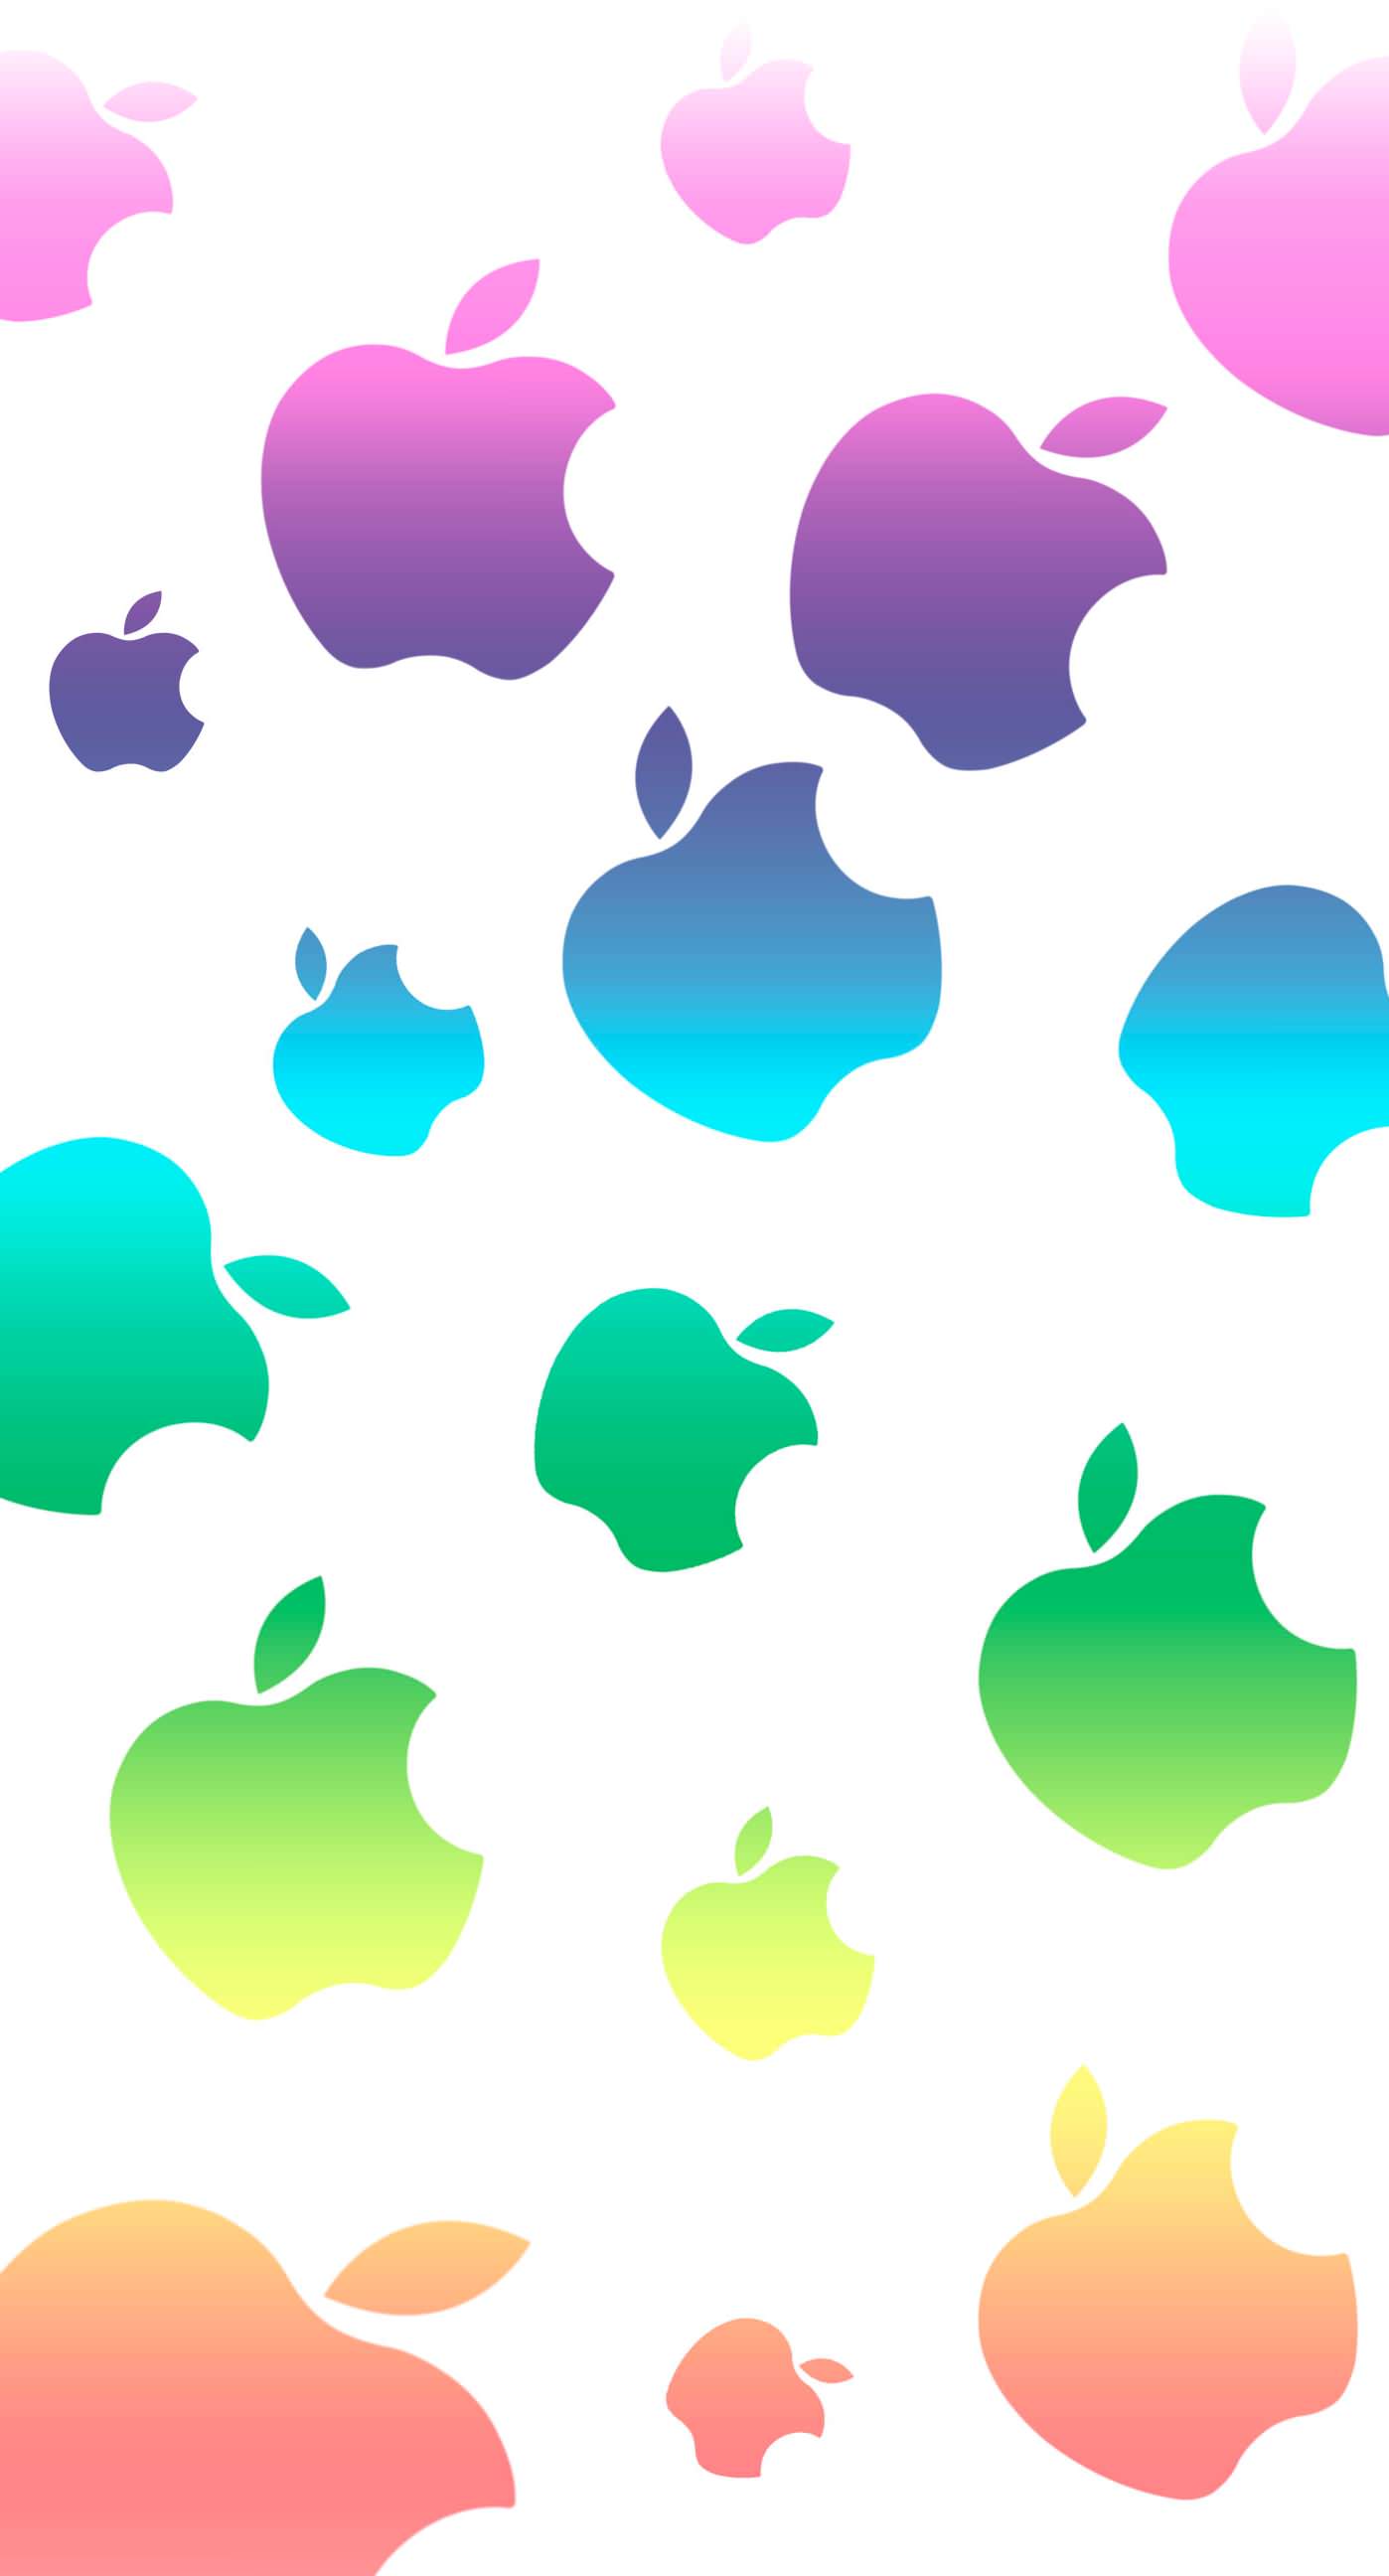 Cute colorful Apple wallpaper.sc iPhone6sPlus